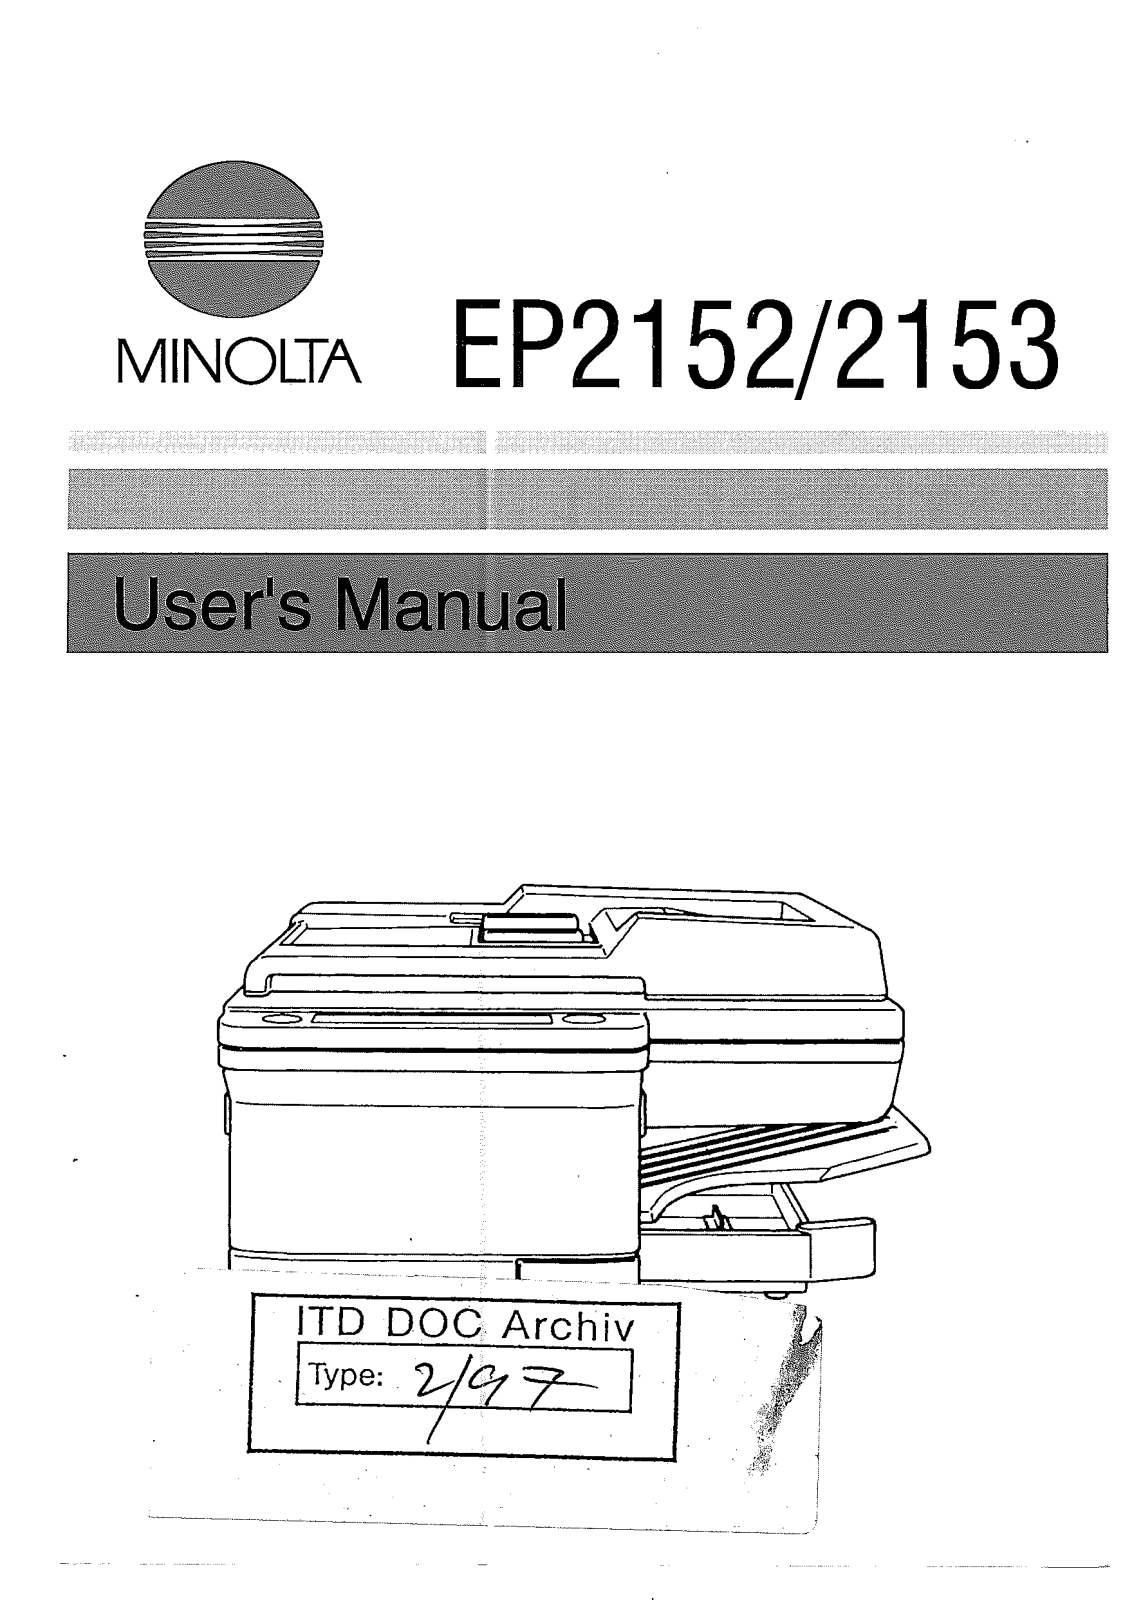 Konica Minolta EP2152, EP2153 Manual